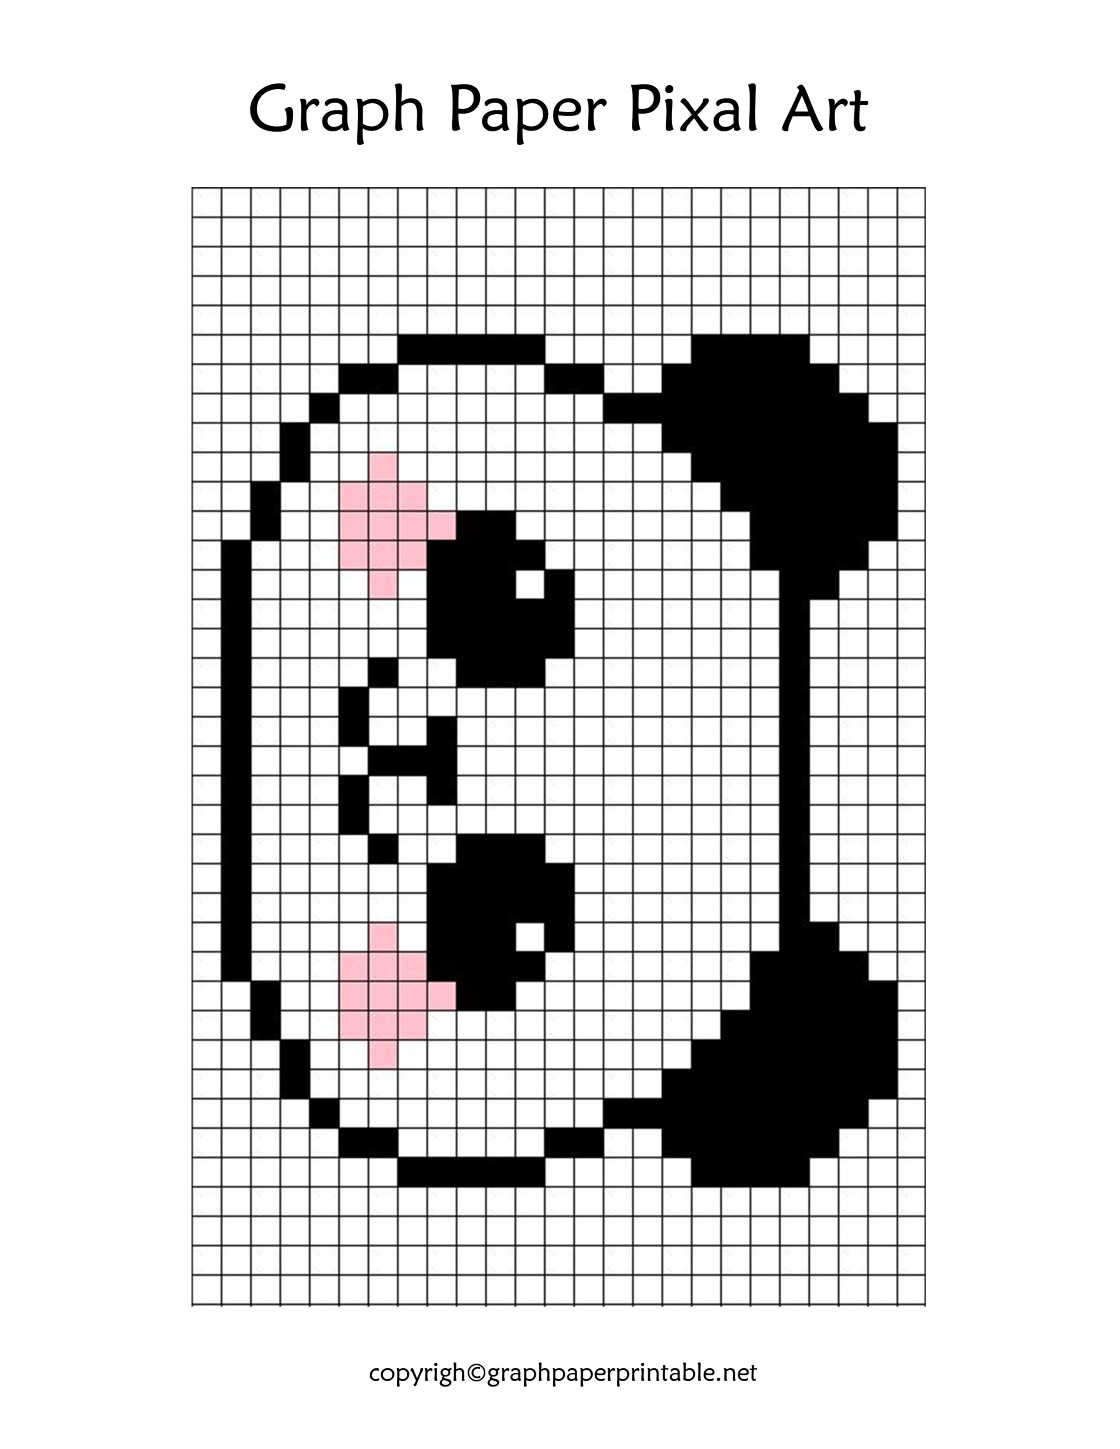 Graph Paper Pixel Art